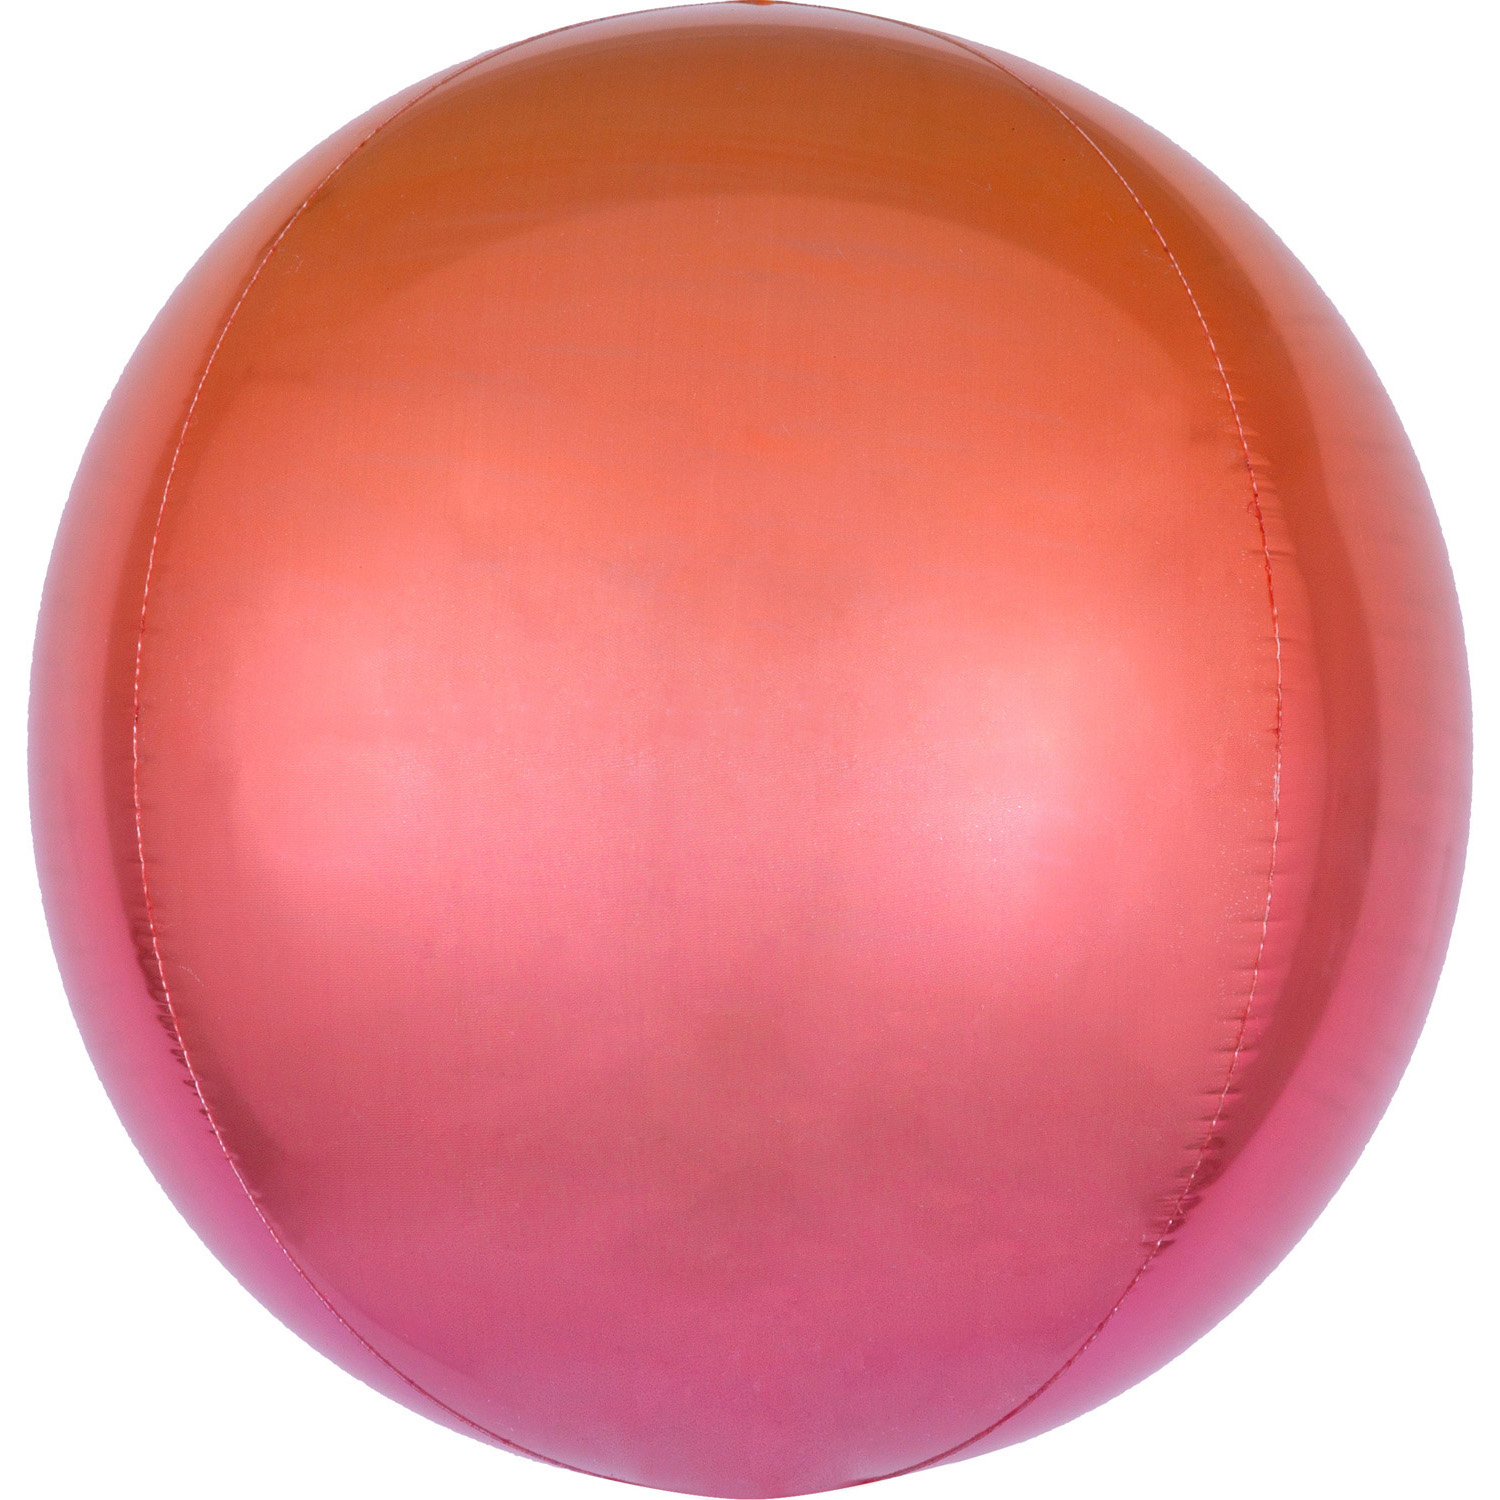 Ombre red-orange foil balloon - sphere